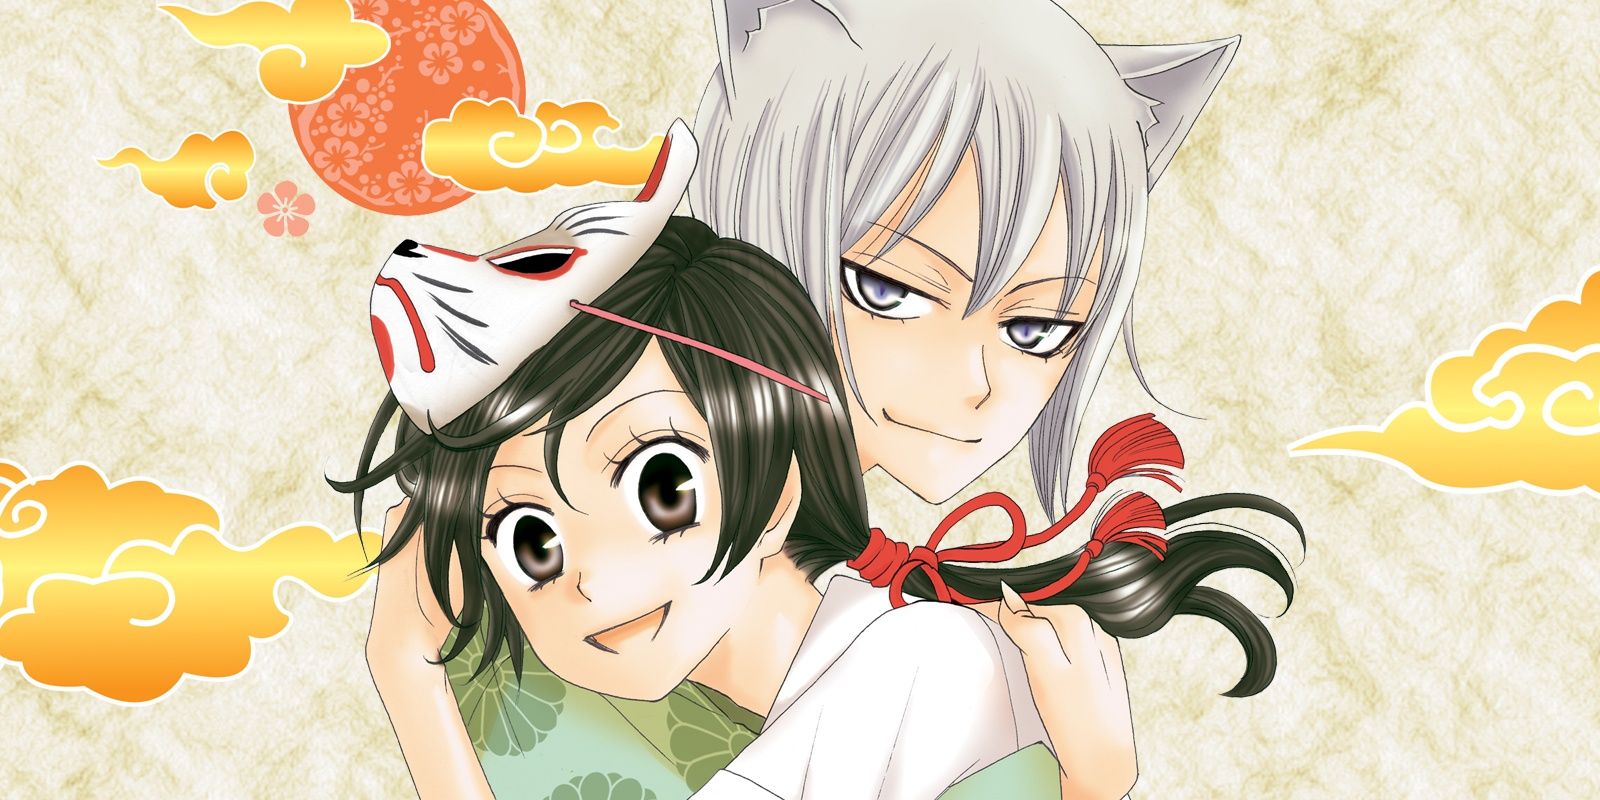 Nanami y Tomoe sonríen y se besan en el manga Kamisama Kiss